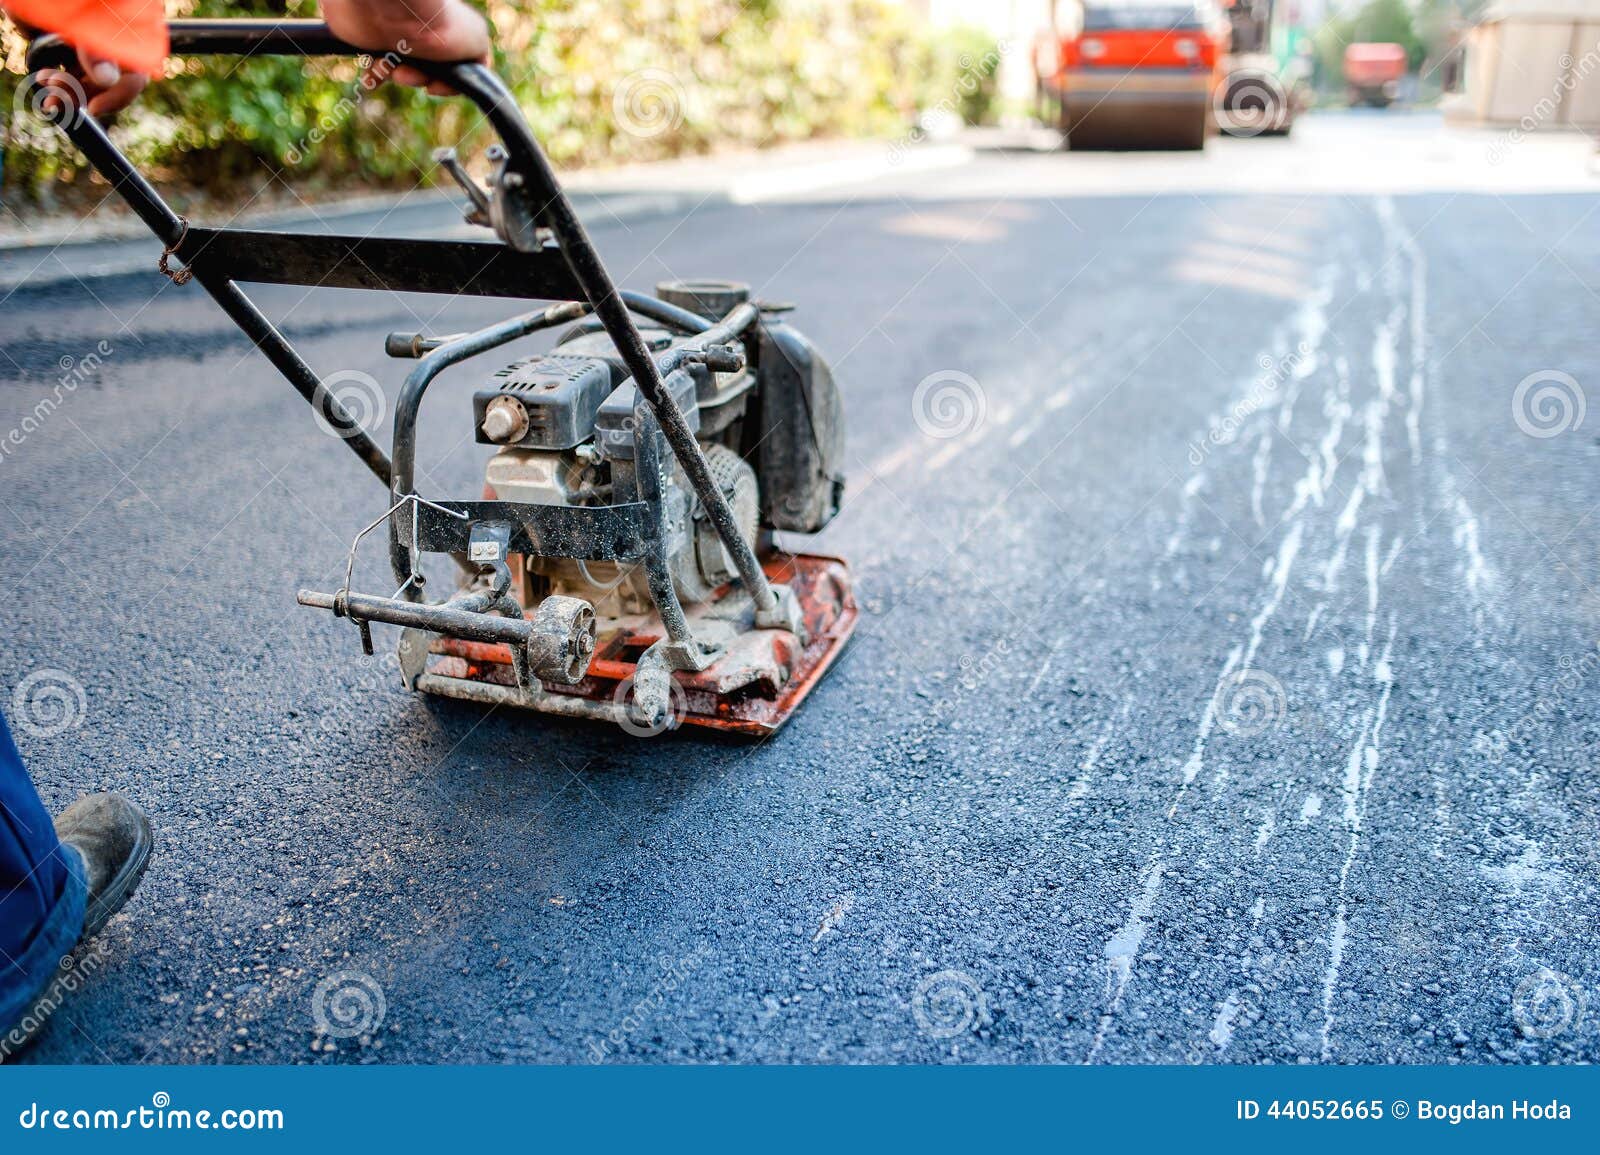 road construction with worker paving the fresh bitumen or asphalt